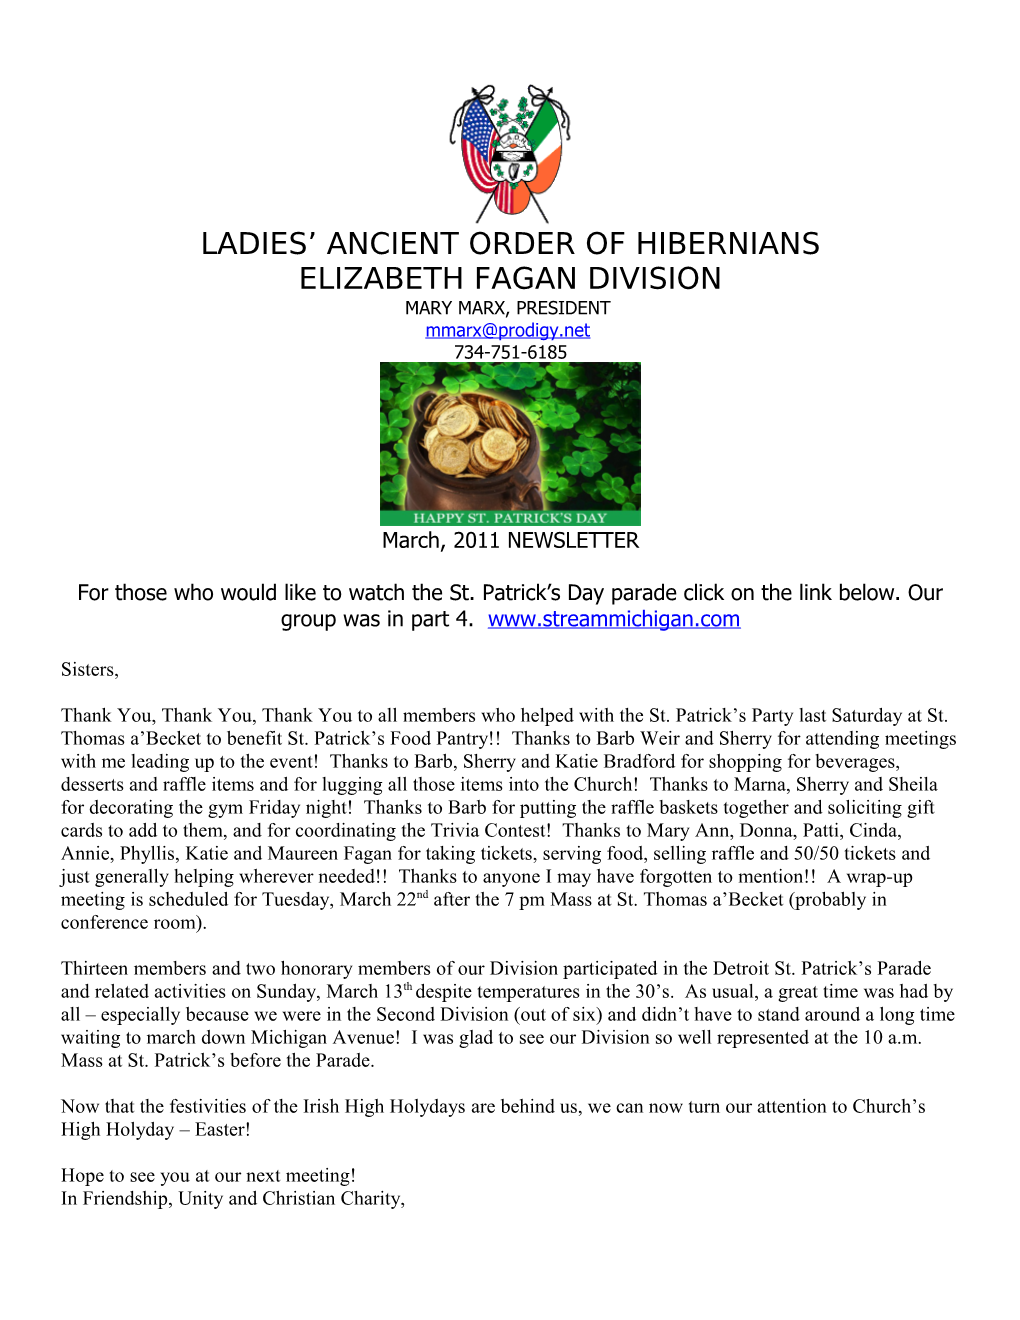 Ladies Ancient Order of Hibernians